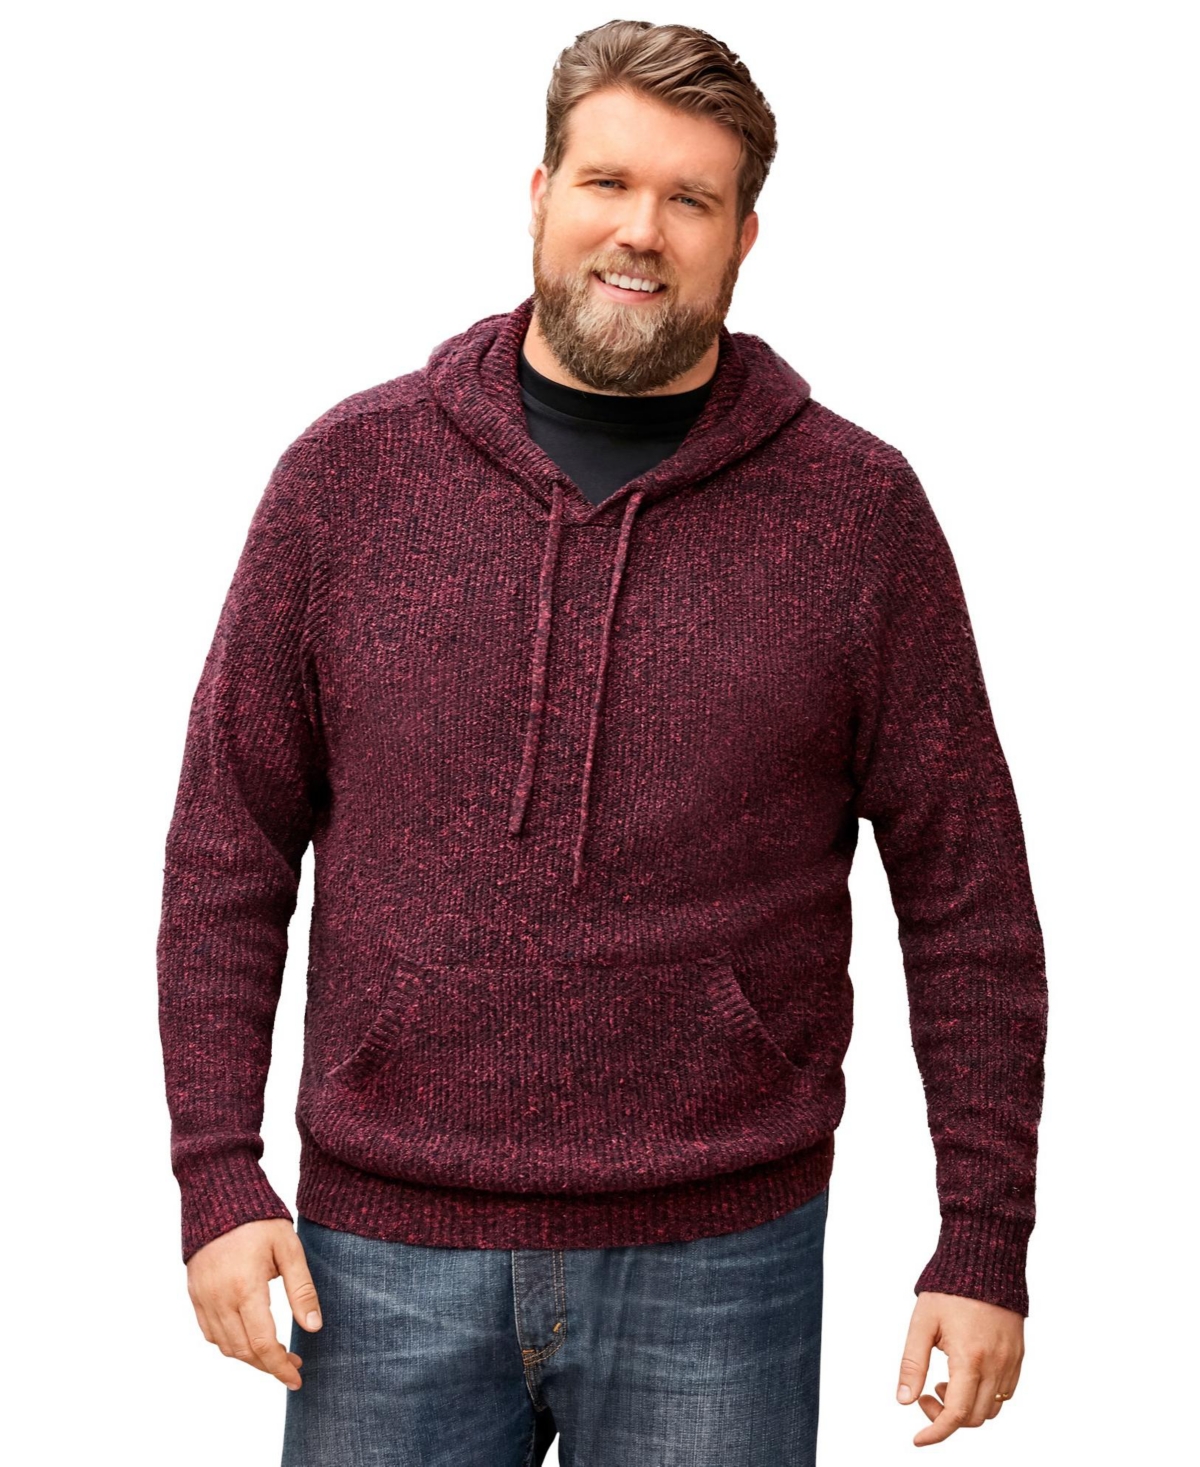 Big & Tall Shaker Knit Hoodie - Rich burgundy marl